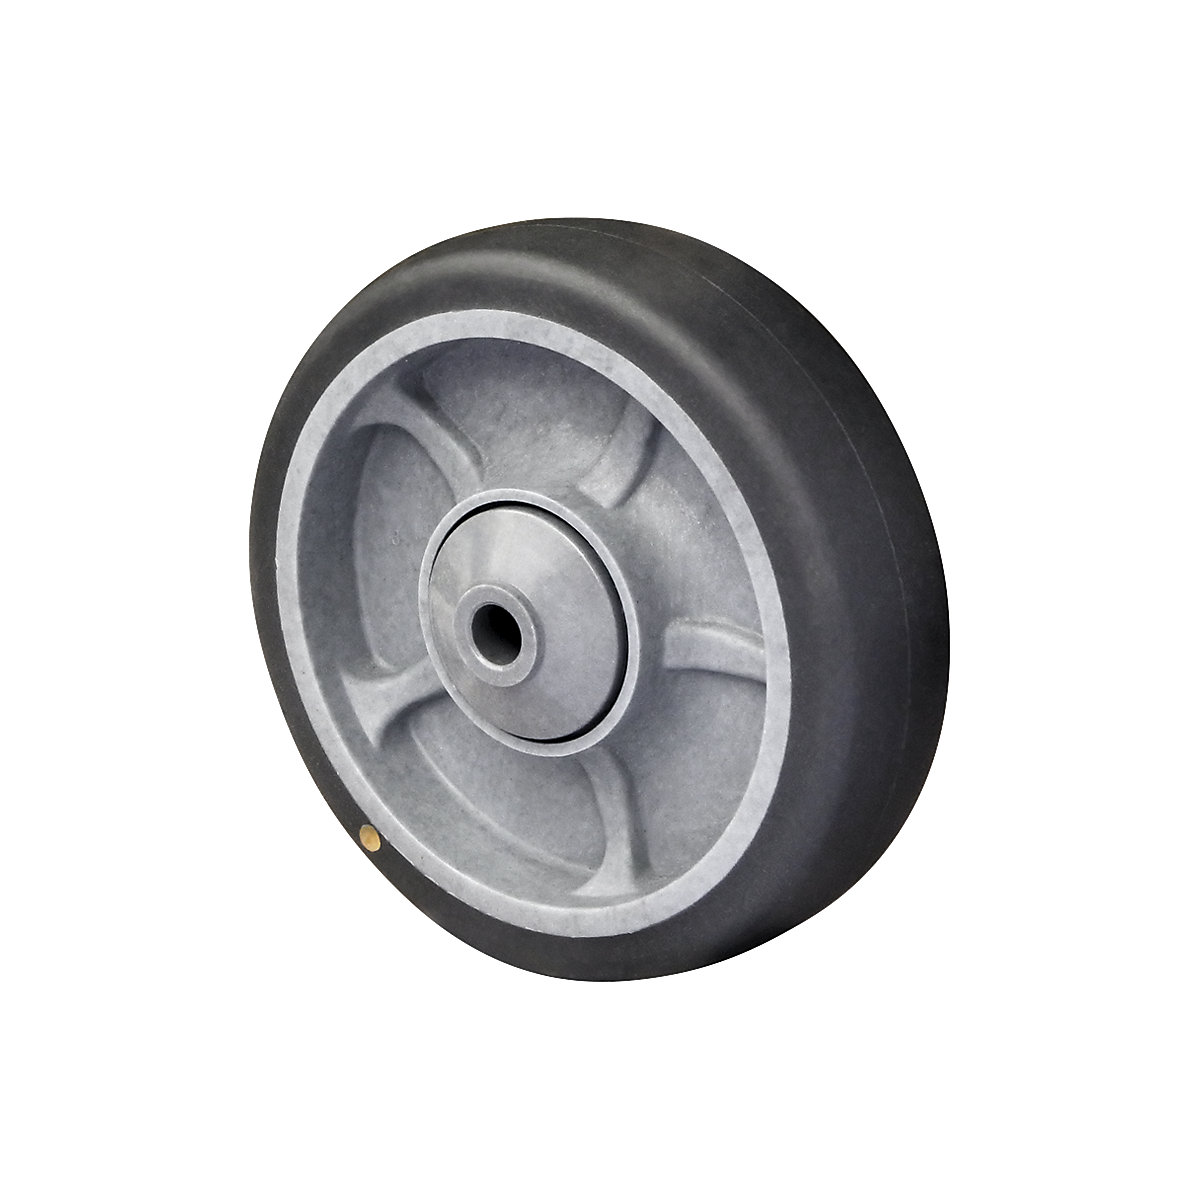 EUROKRAFTbasic – TPE wheel on PP rim, ESD, ball bearings, wheel Ø x width 125 x 35 mm